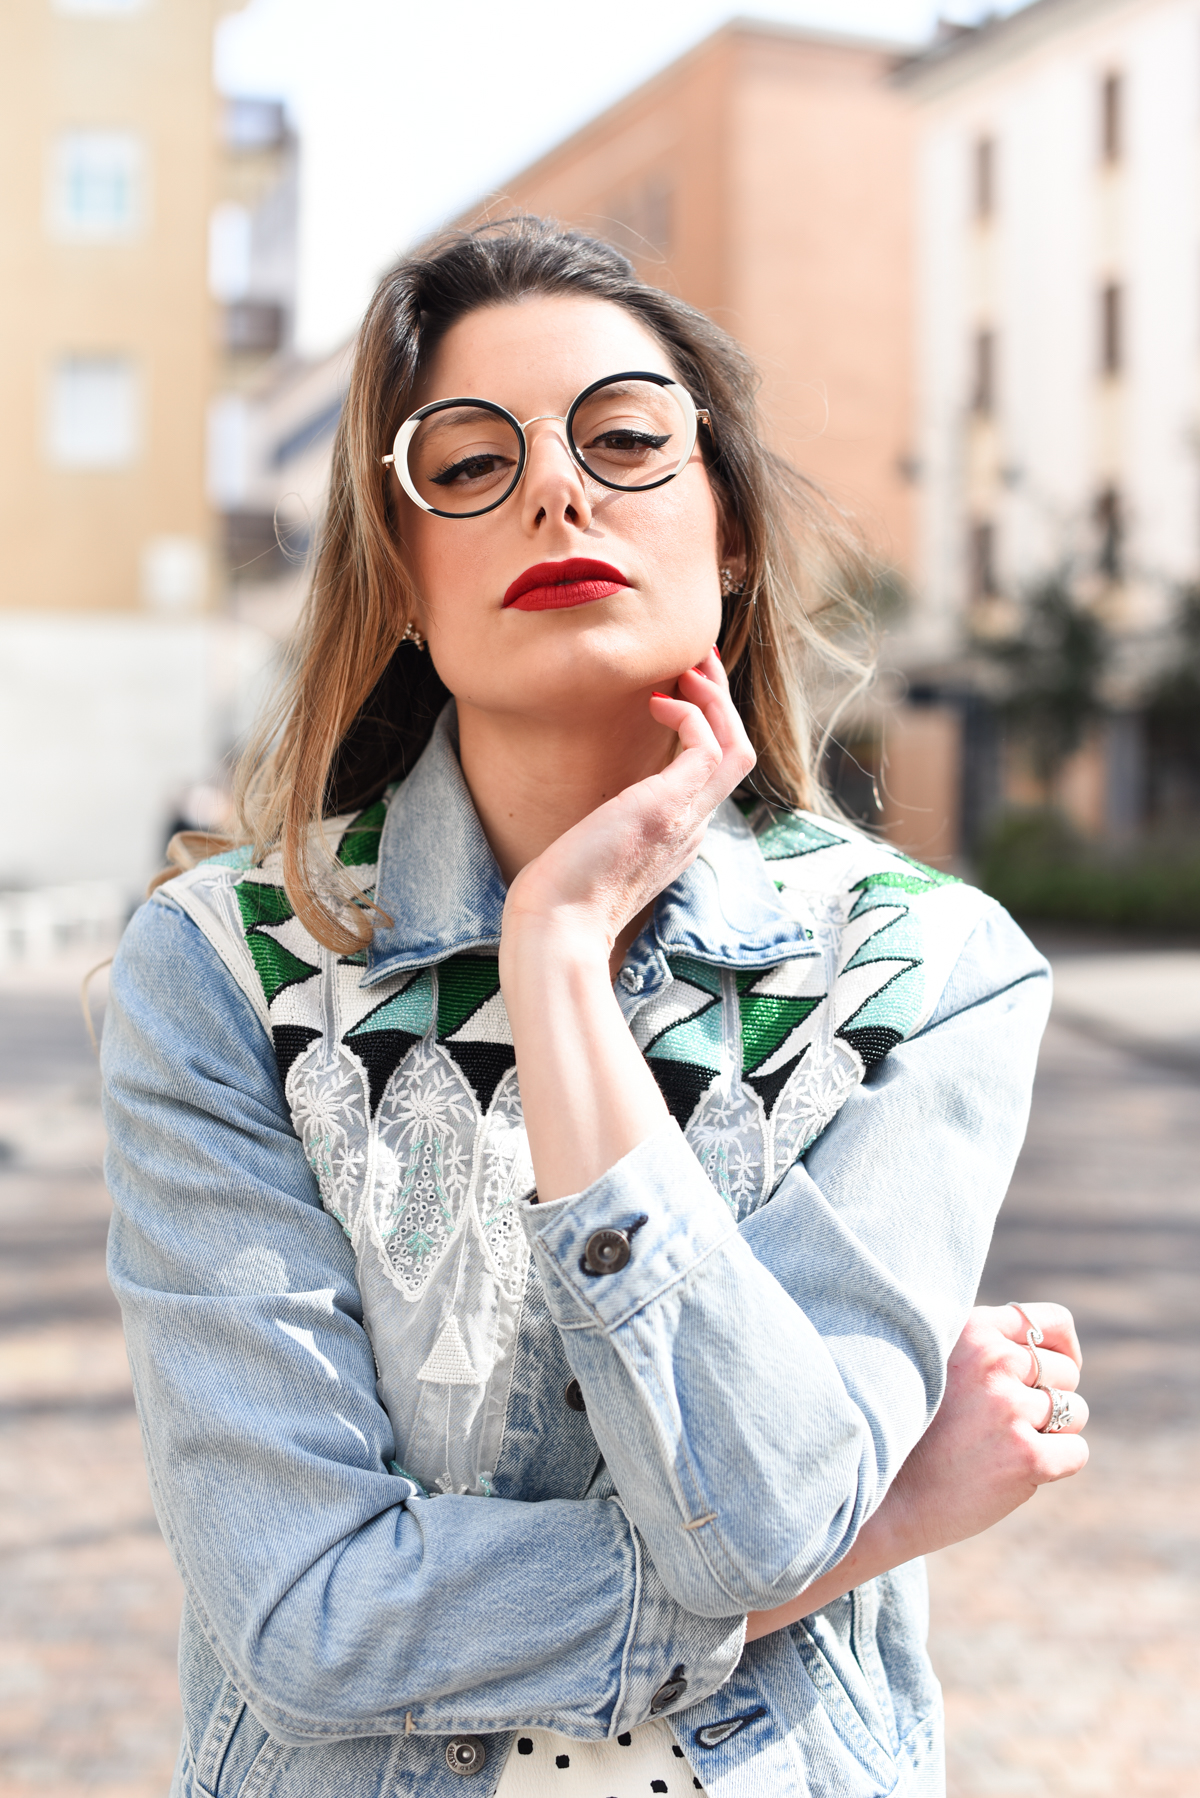 Giulia-de-martin-woow-eyeglasses-lunettes-2018-french-eyewear-BLAST-1-2-blog-eyewear-behind-my-glasses-influncer